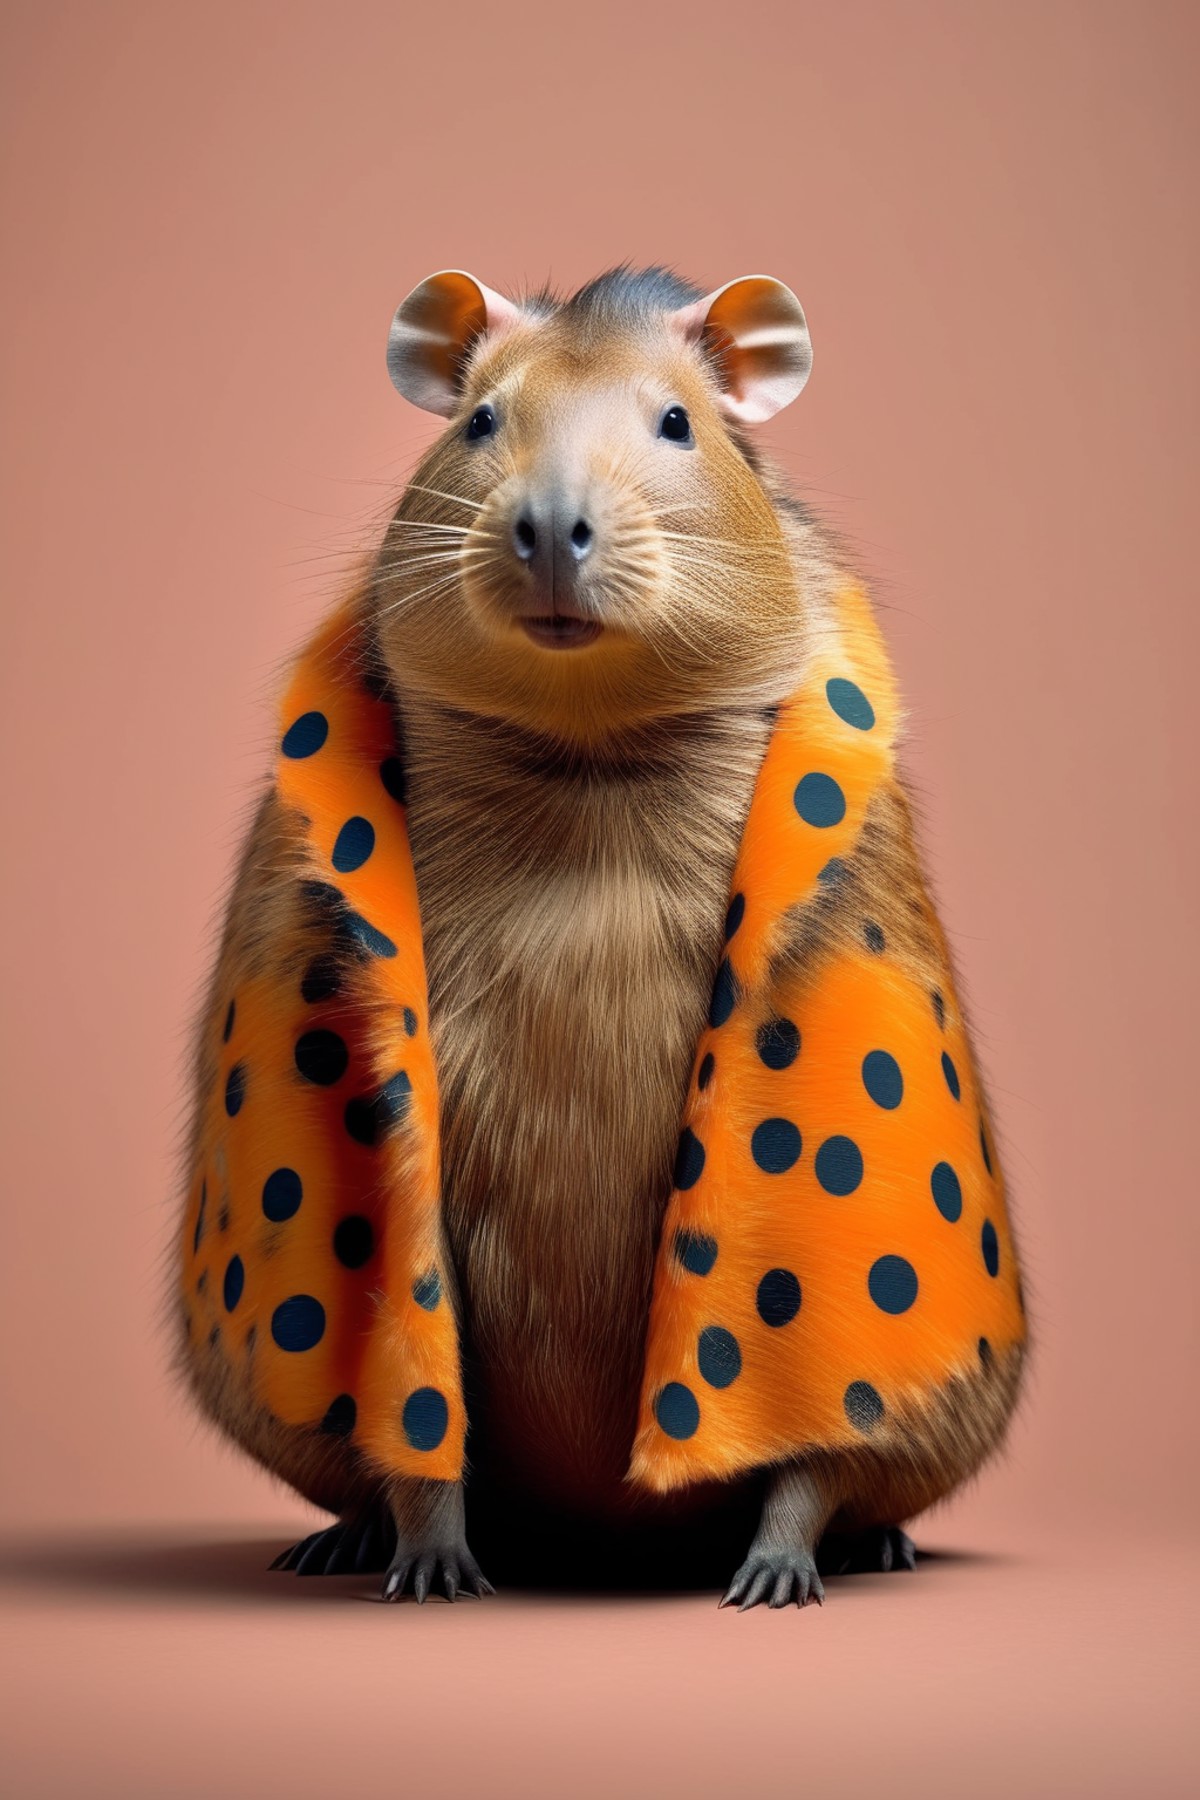 <lora:Dressed animals:1>Dressed animals - capybara with beautiful polka dot patterned fur